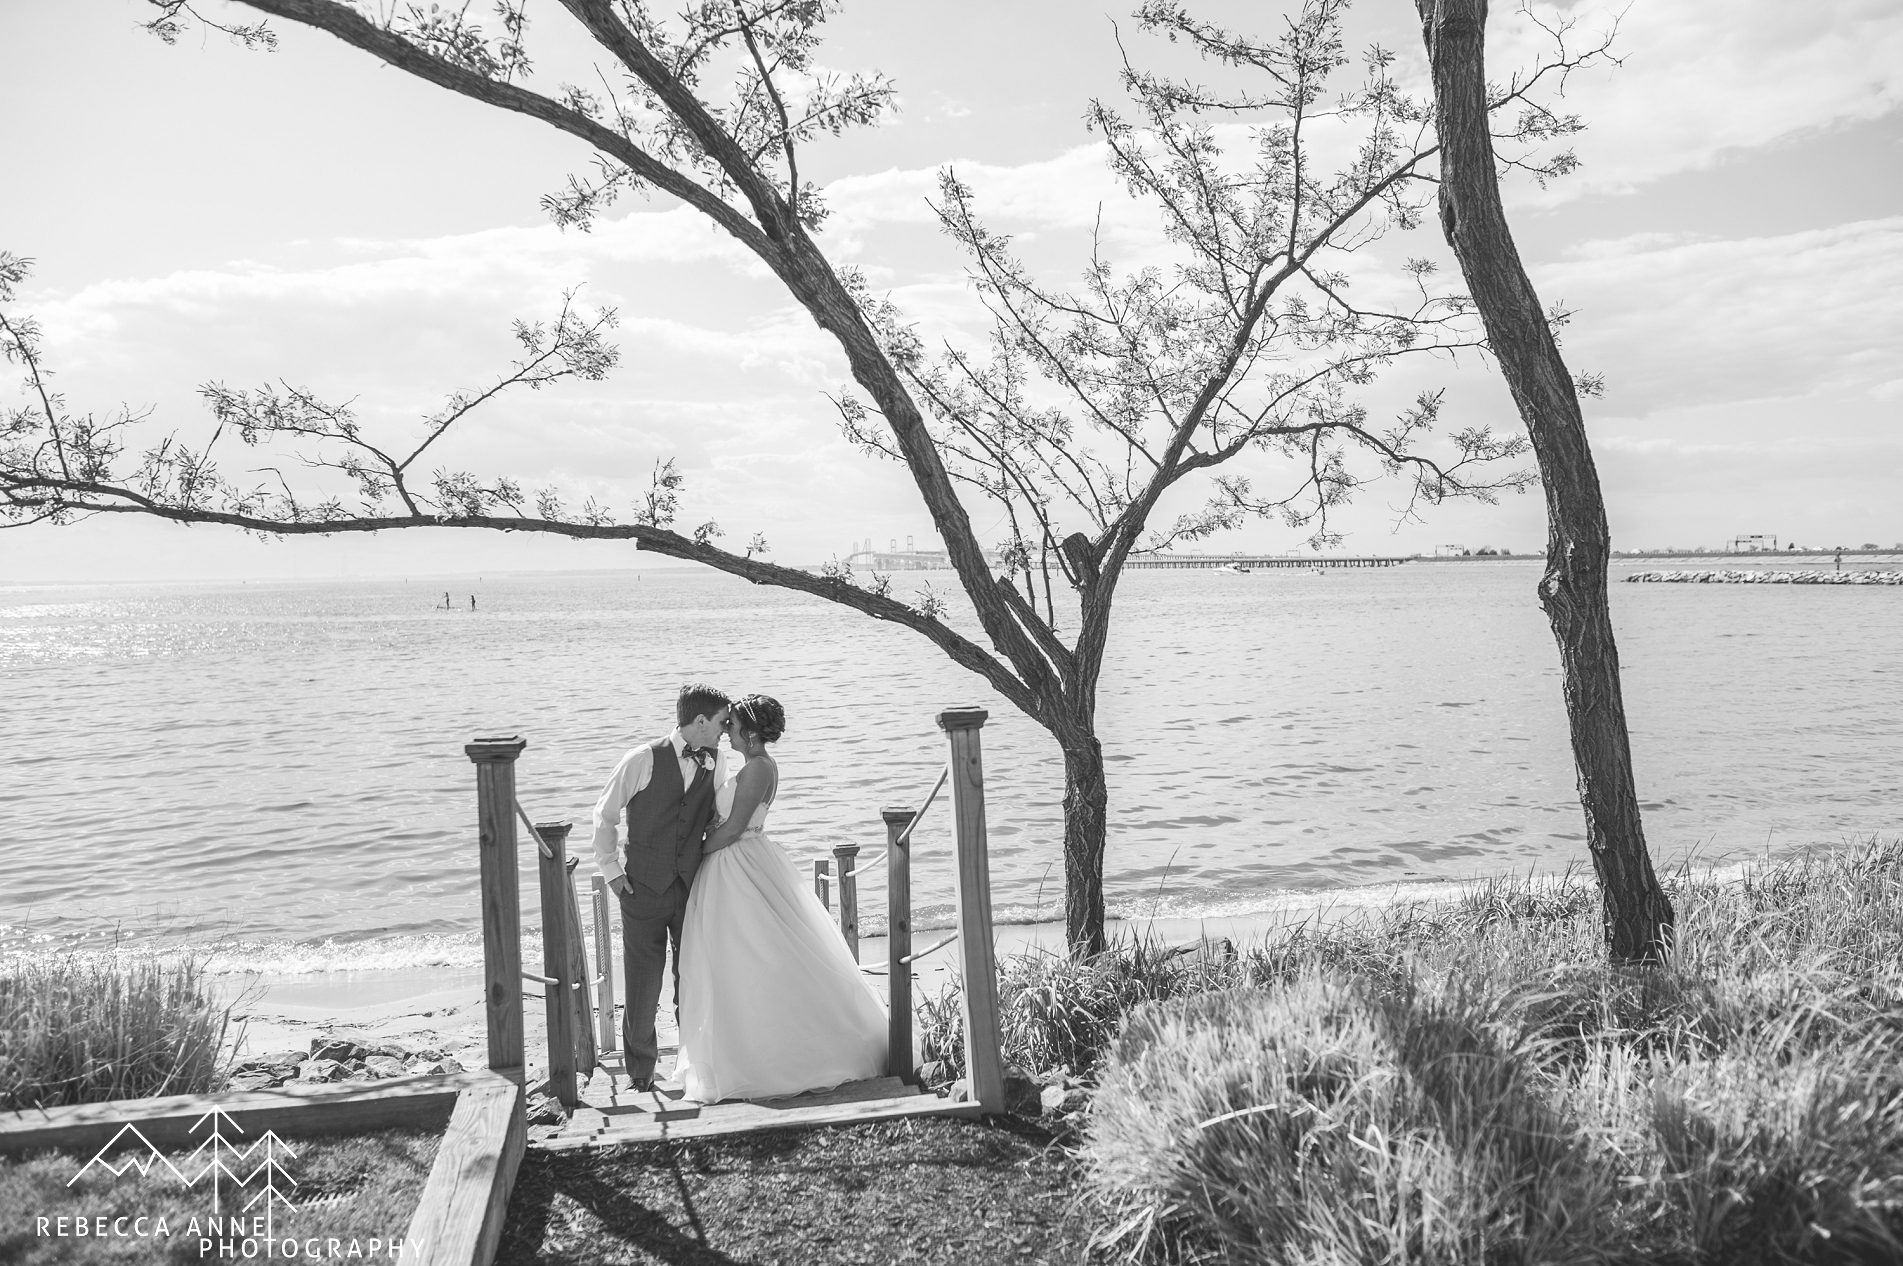 Chesapeake Bay Beach Club Wedding by destination wedding photographer Rebecca Anne Photography.